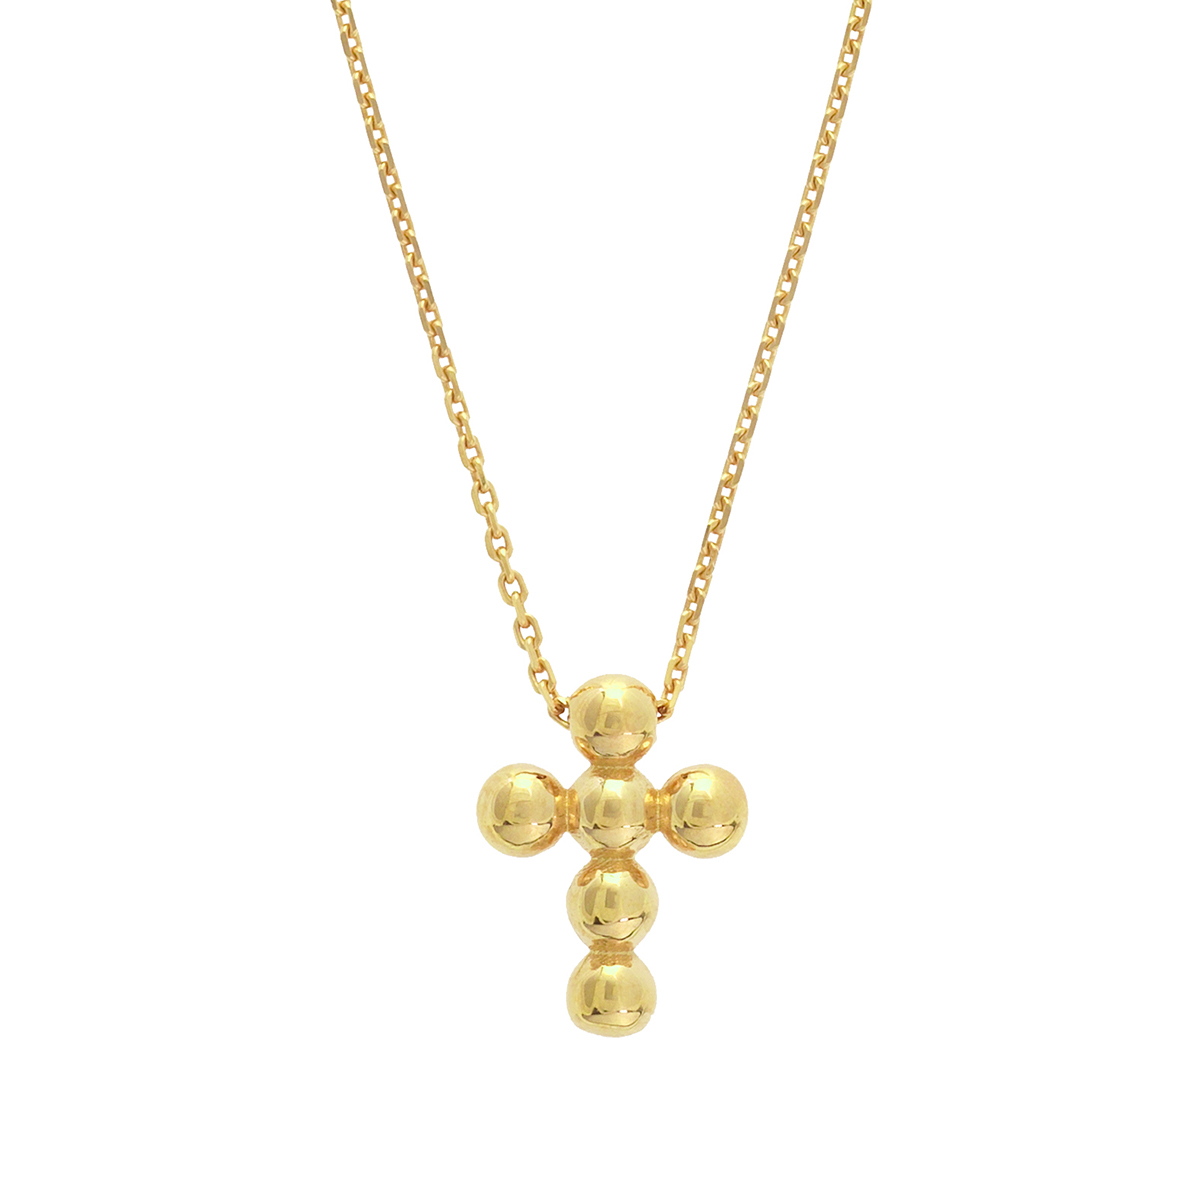 Small Bead Cross Pendant in Yellow Gold, 18